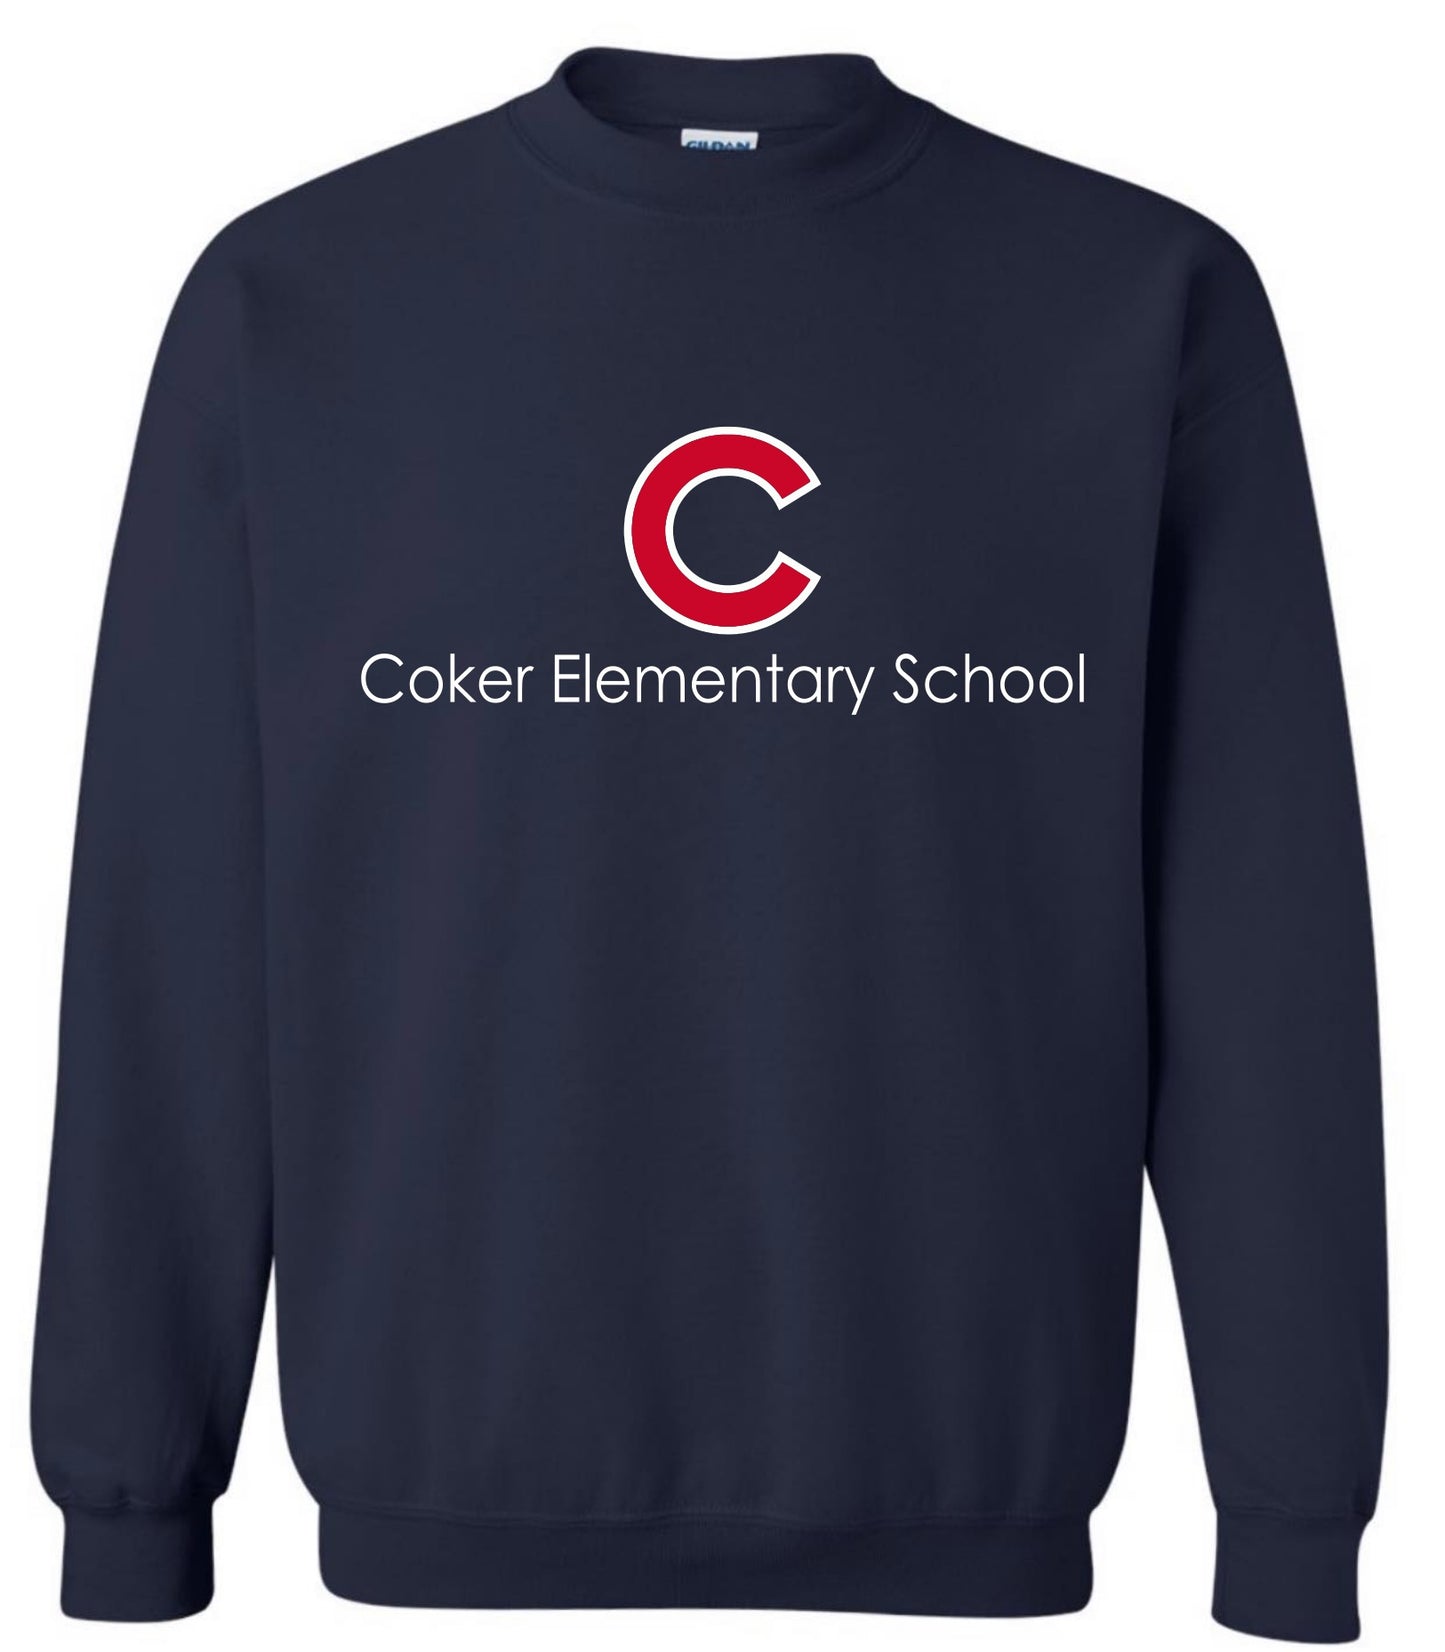 Coker Elementary School Sweatshirt